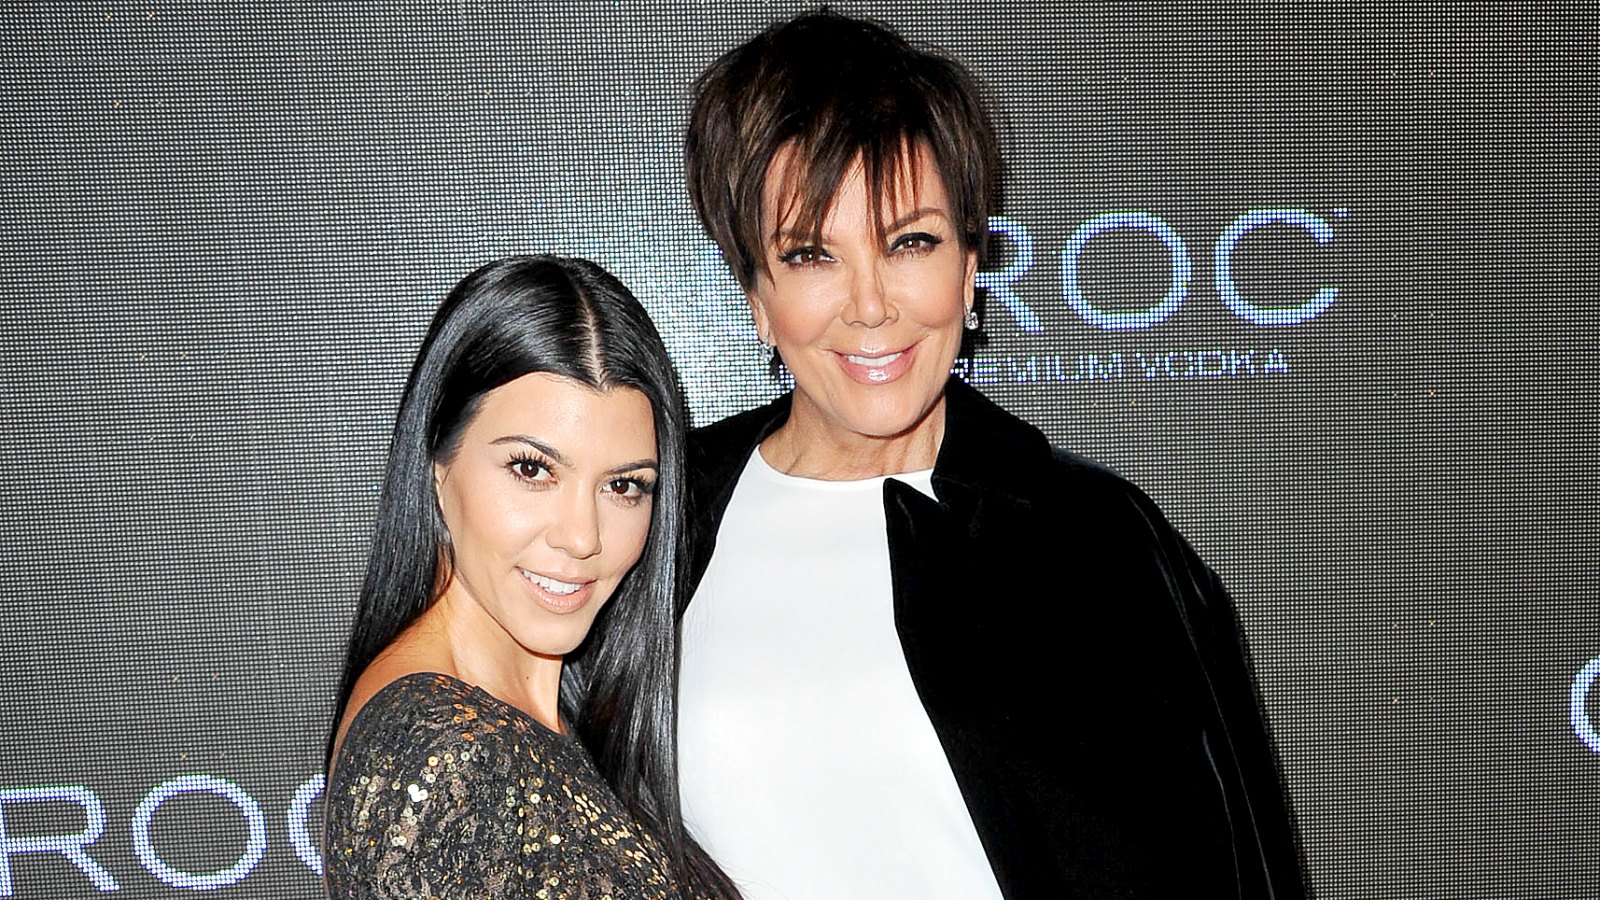 Kris Jenner wishes daughter Kourtney Kardashian a happy birthday